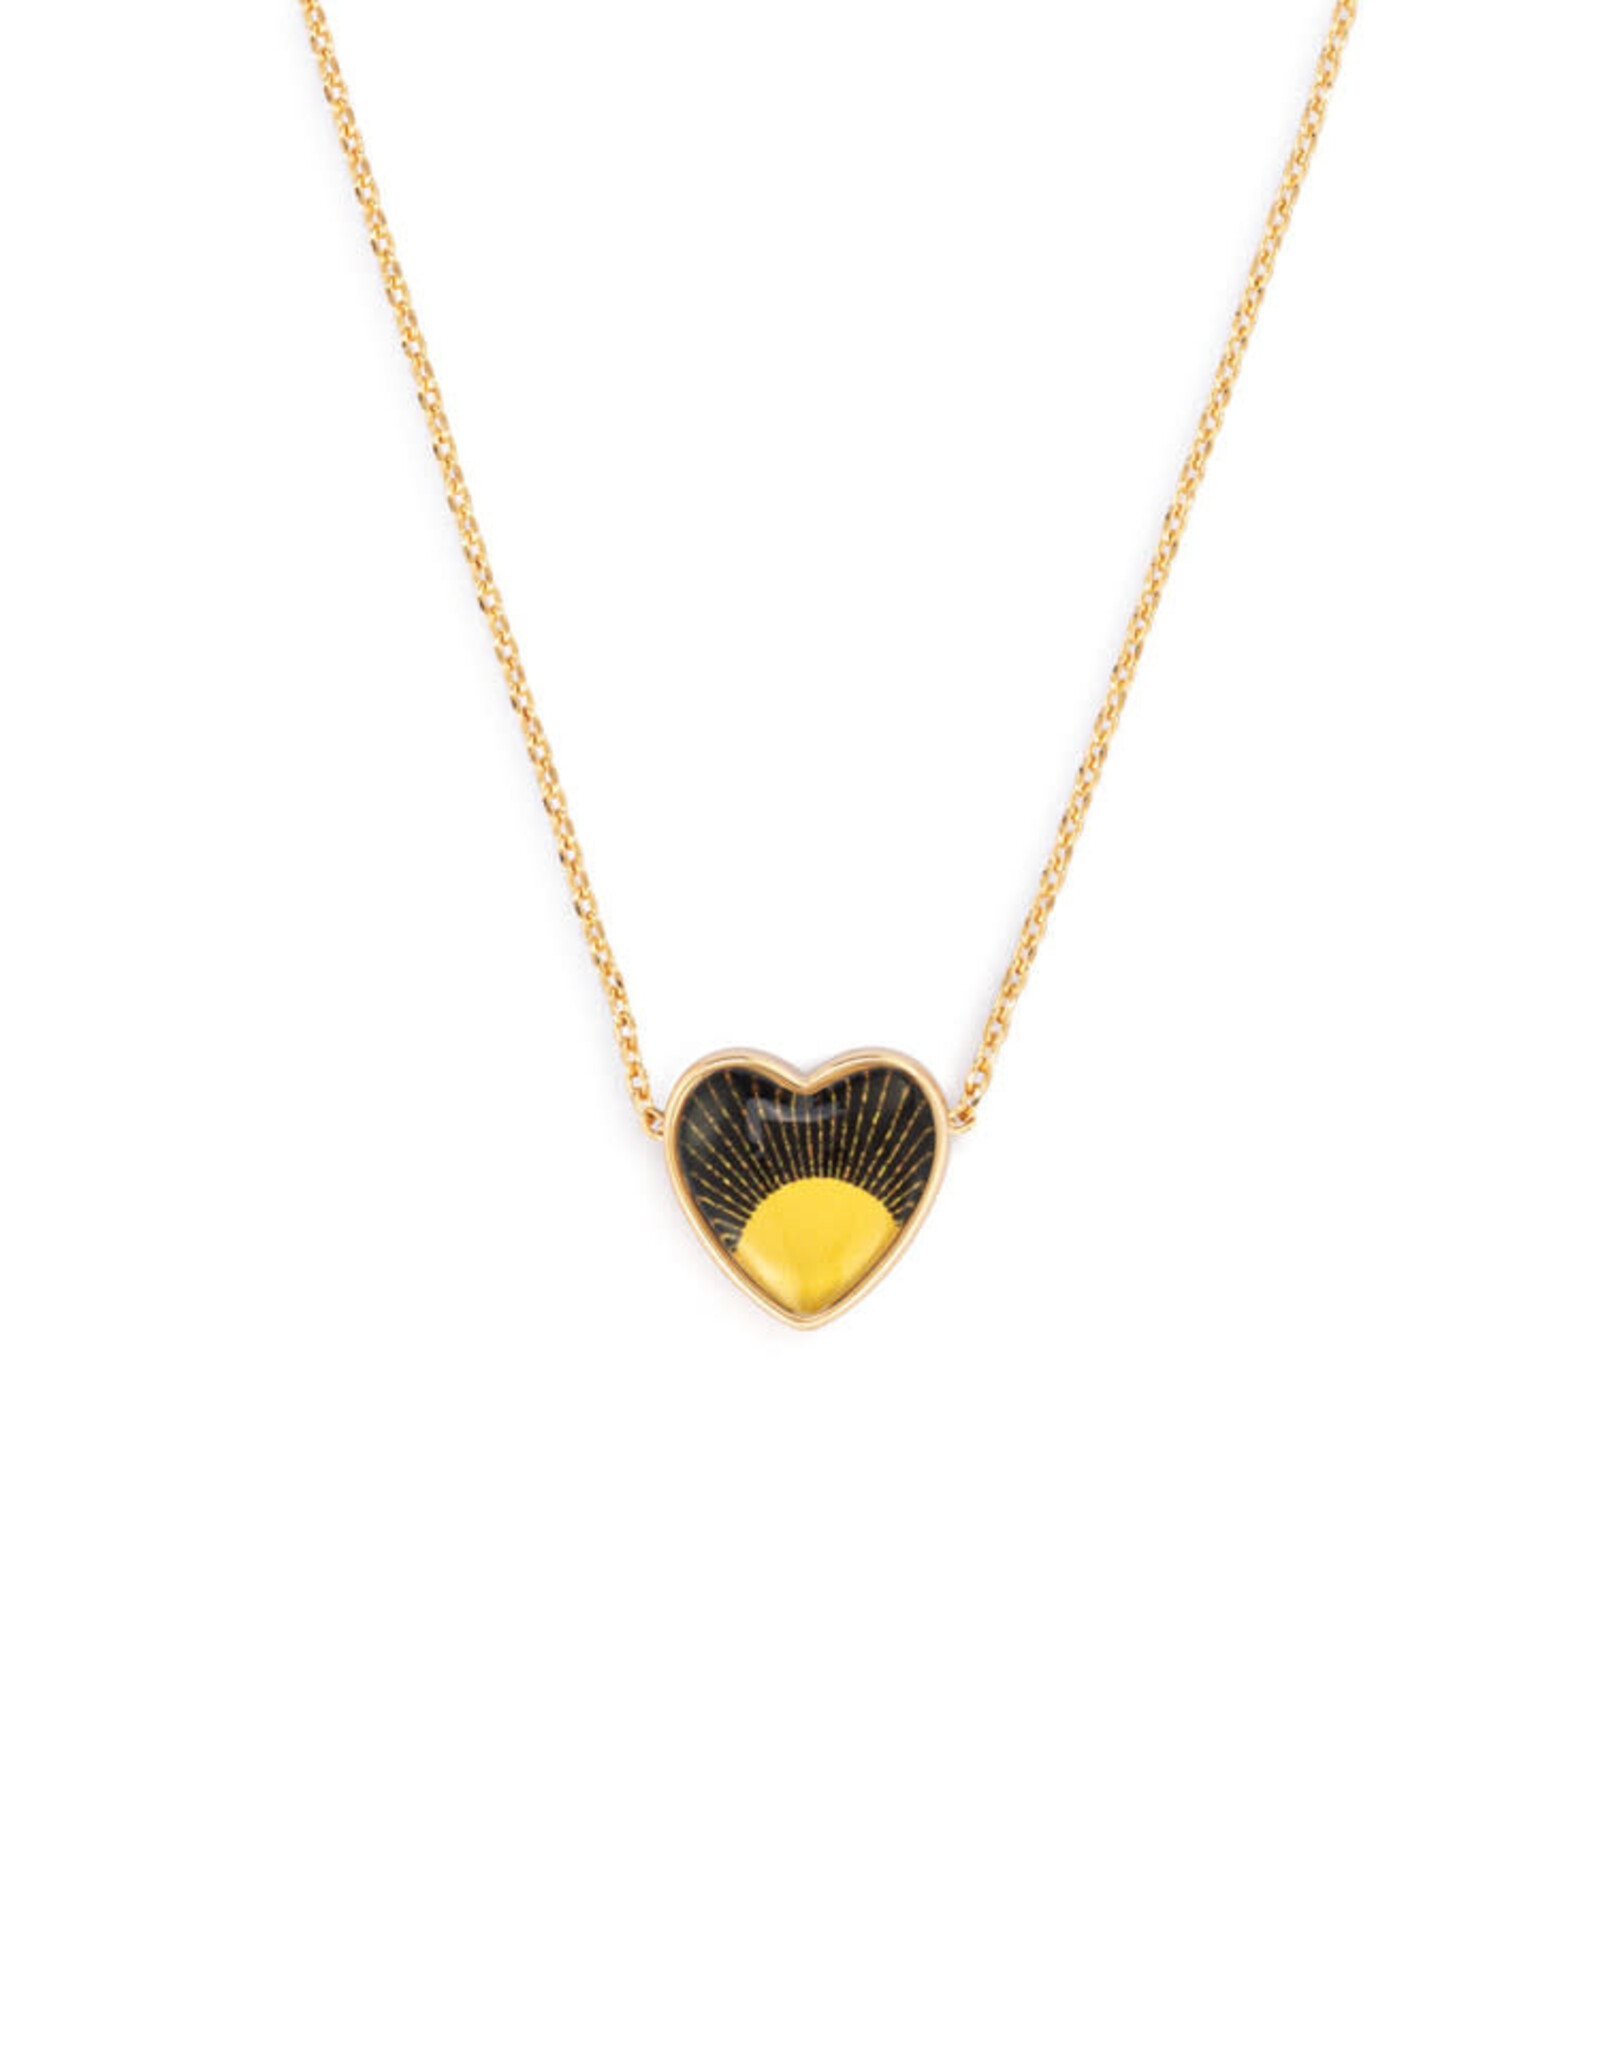 Demdaco ART HEART NECKLACE - thoughtful jewelry